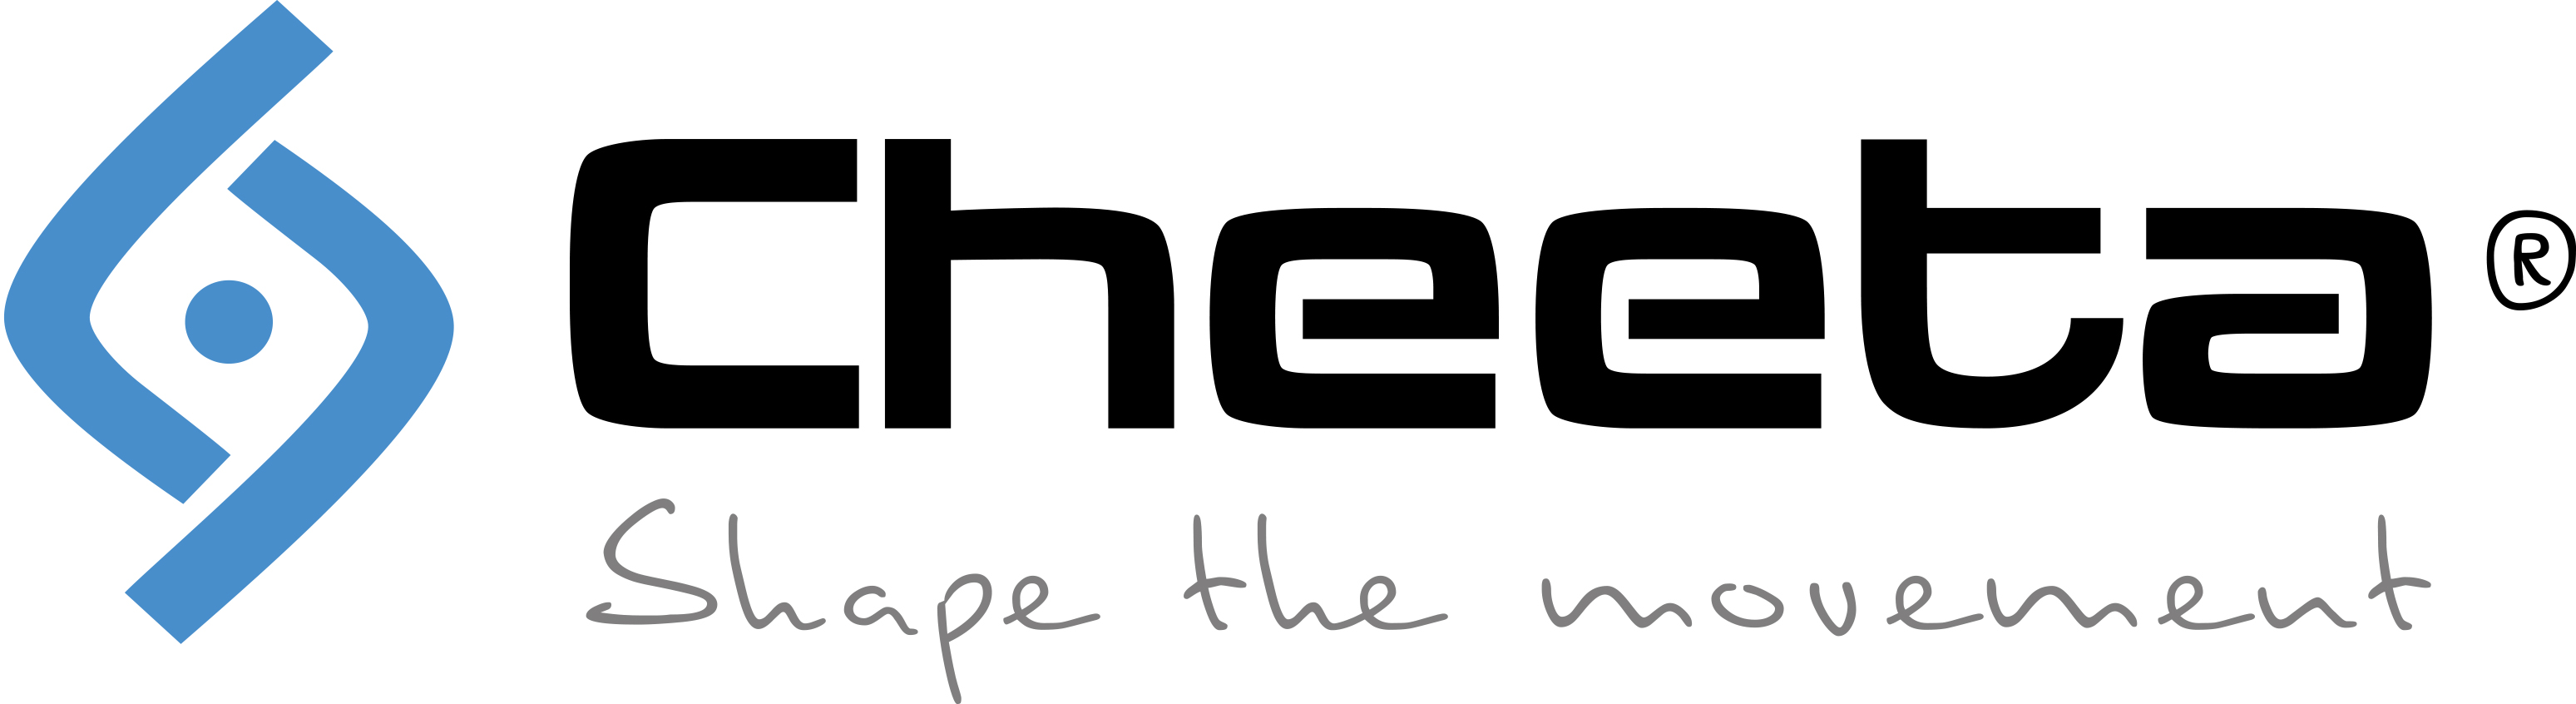 Cheeta logo redesign v2